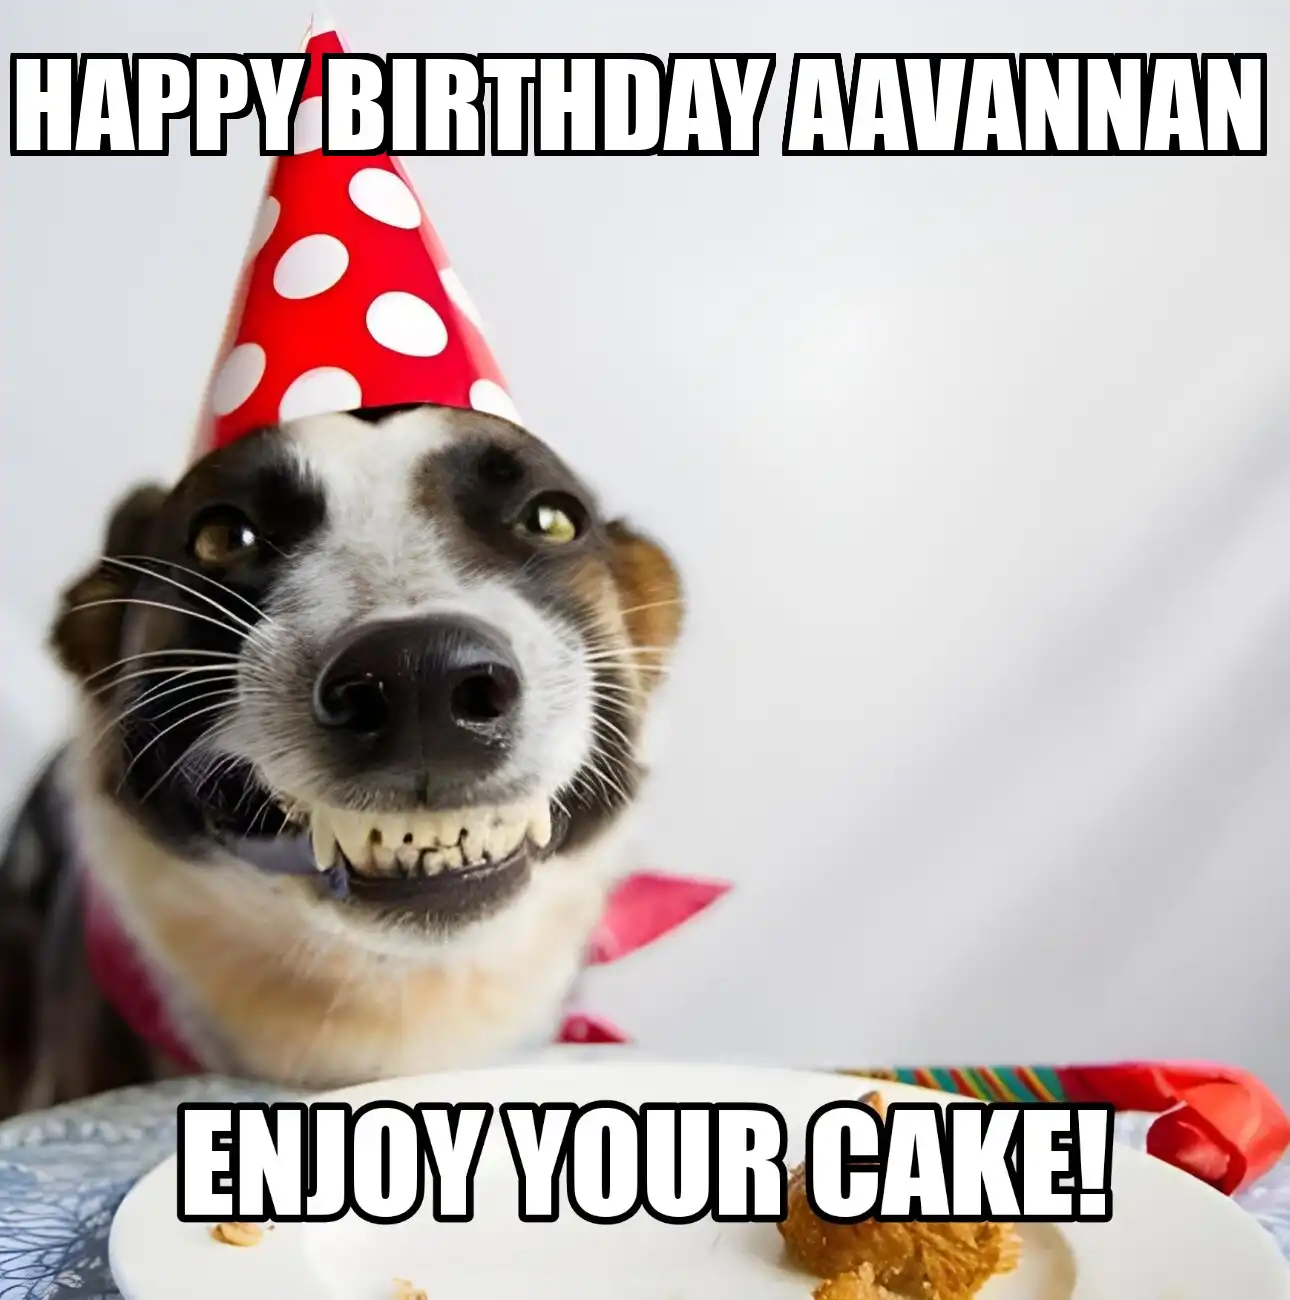 Happy Birthday Aavannan Enjoy Your Cake Dog Meme